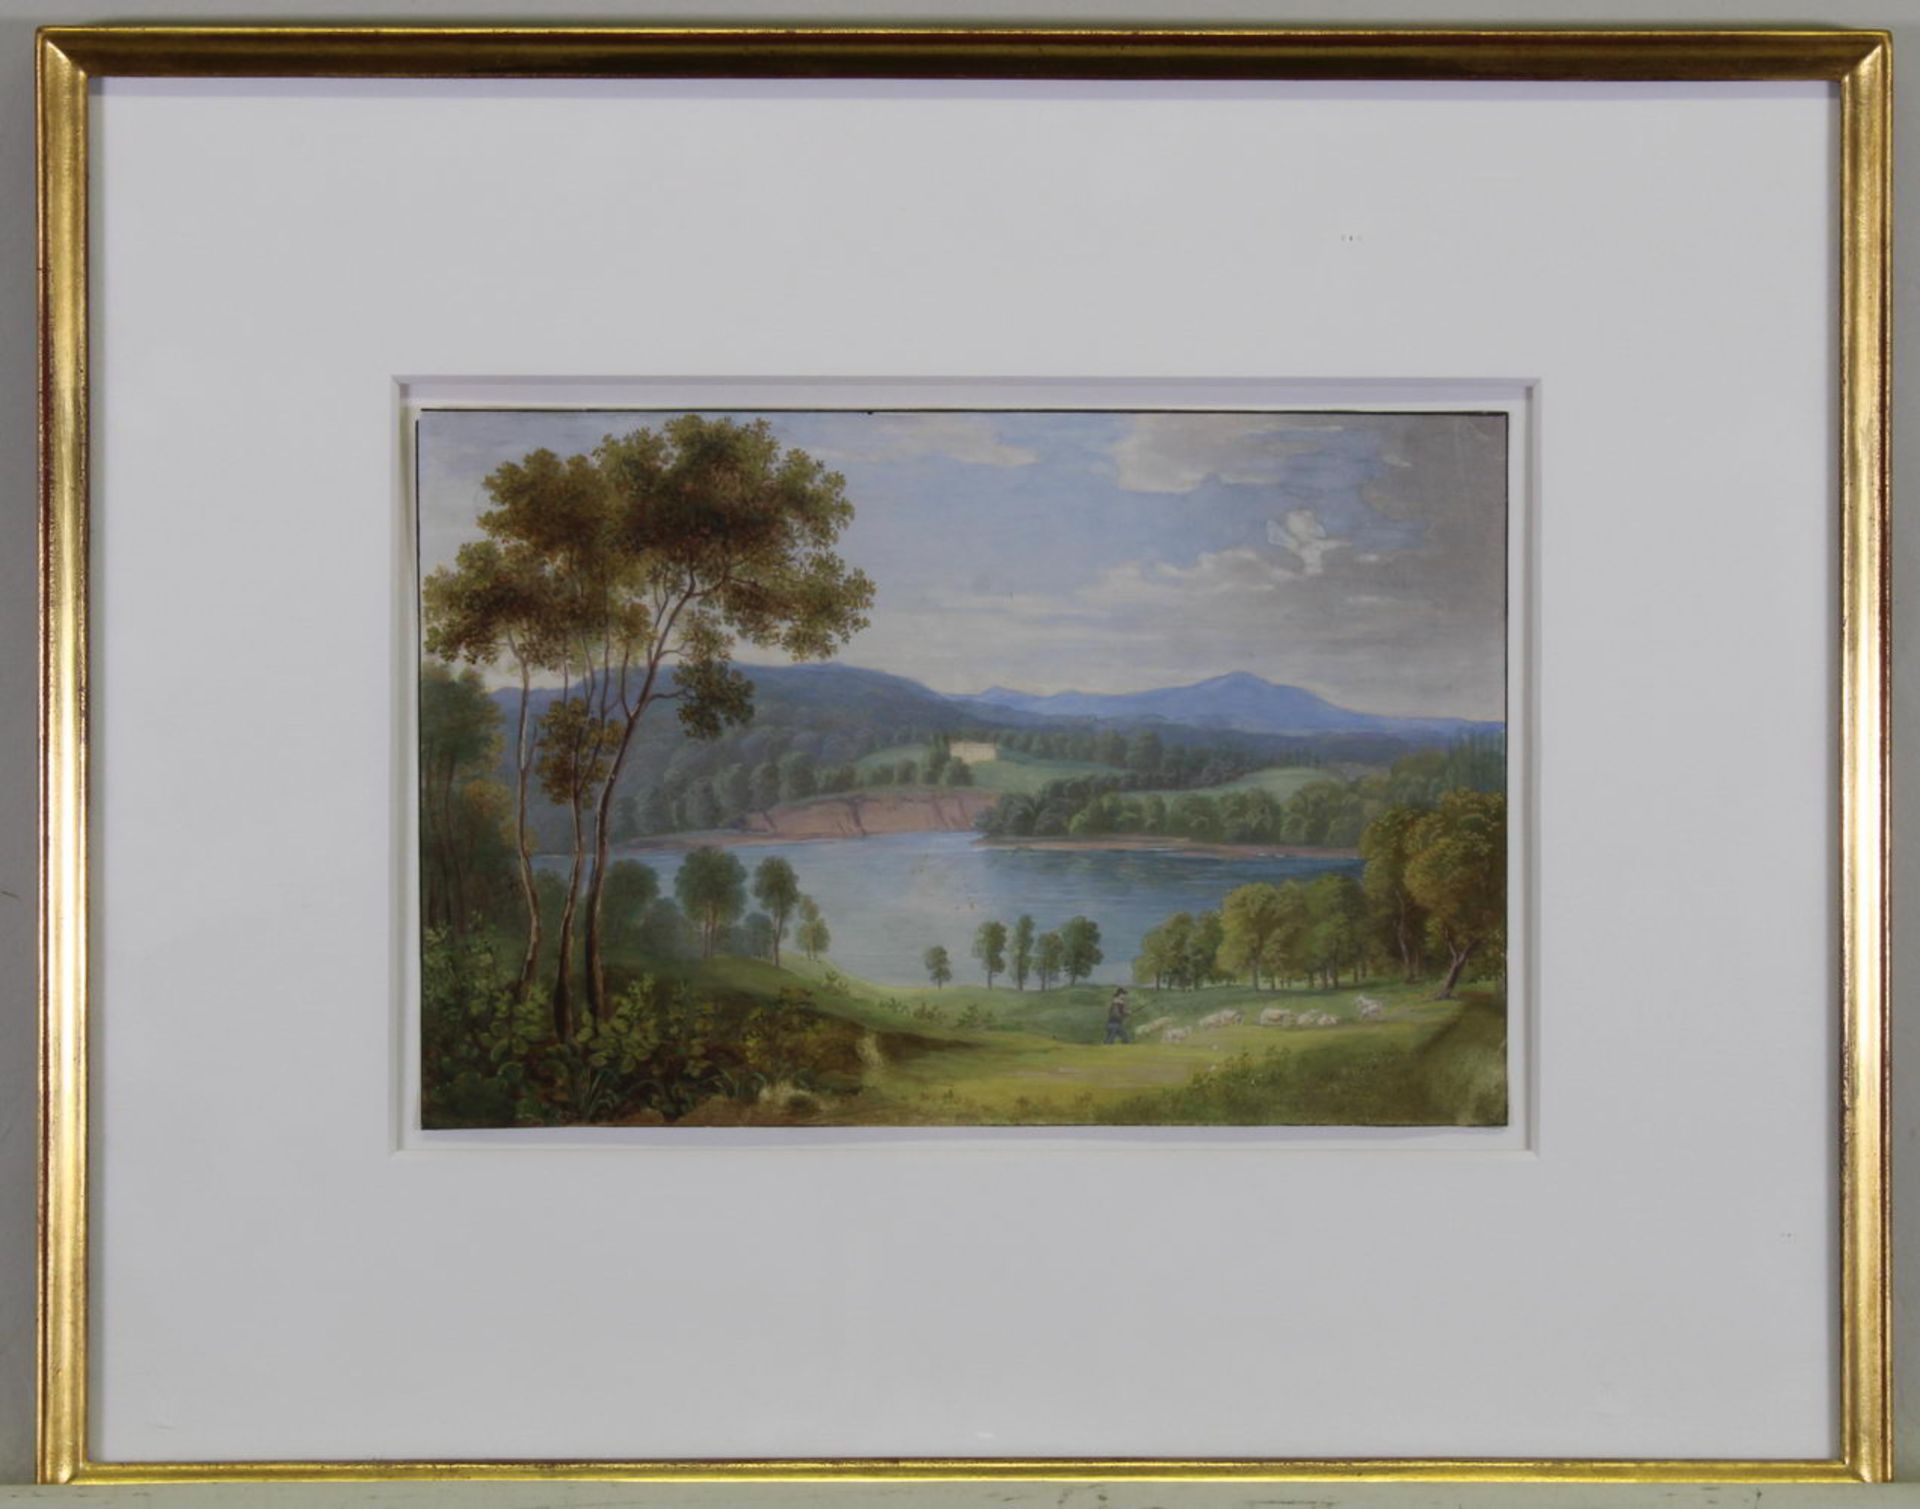 Unbekannter Maler (19. Jh.), "Schafhirte in Landschaft", Gouache, 15 x 23 cm, leichte Bereibungen, - Image 2 of 2